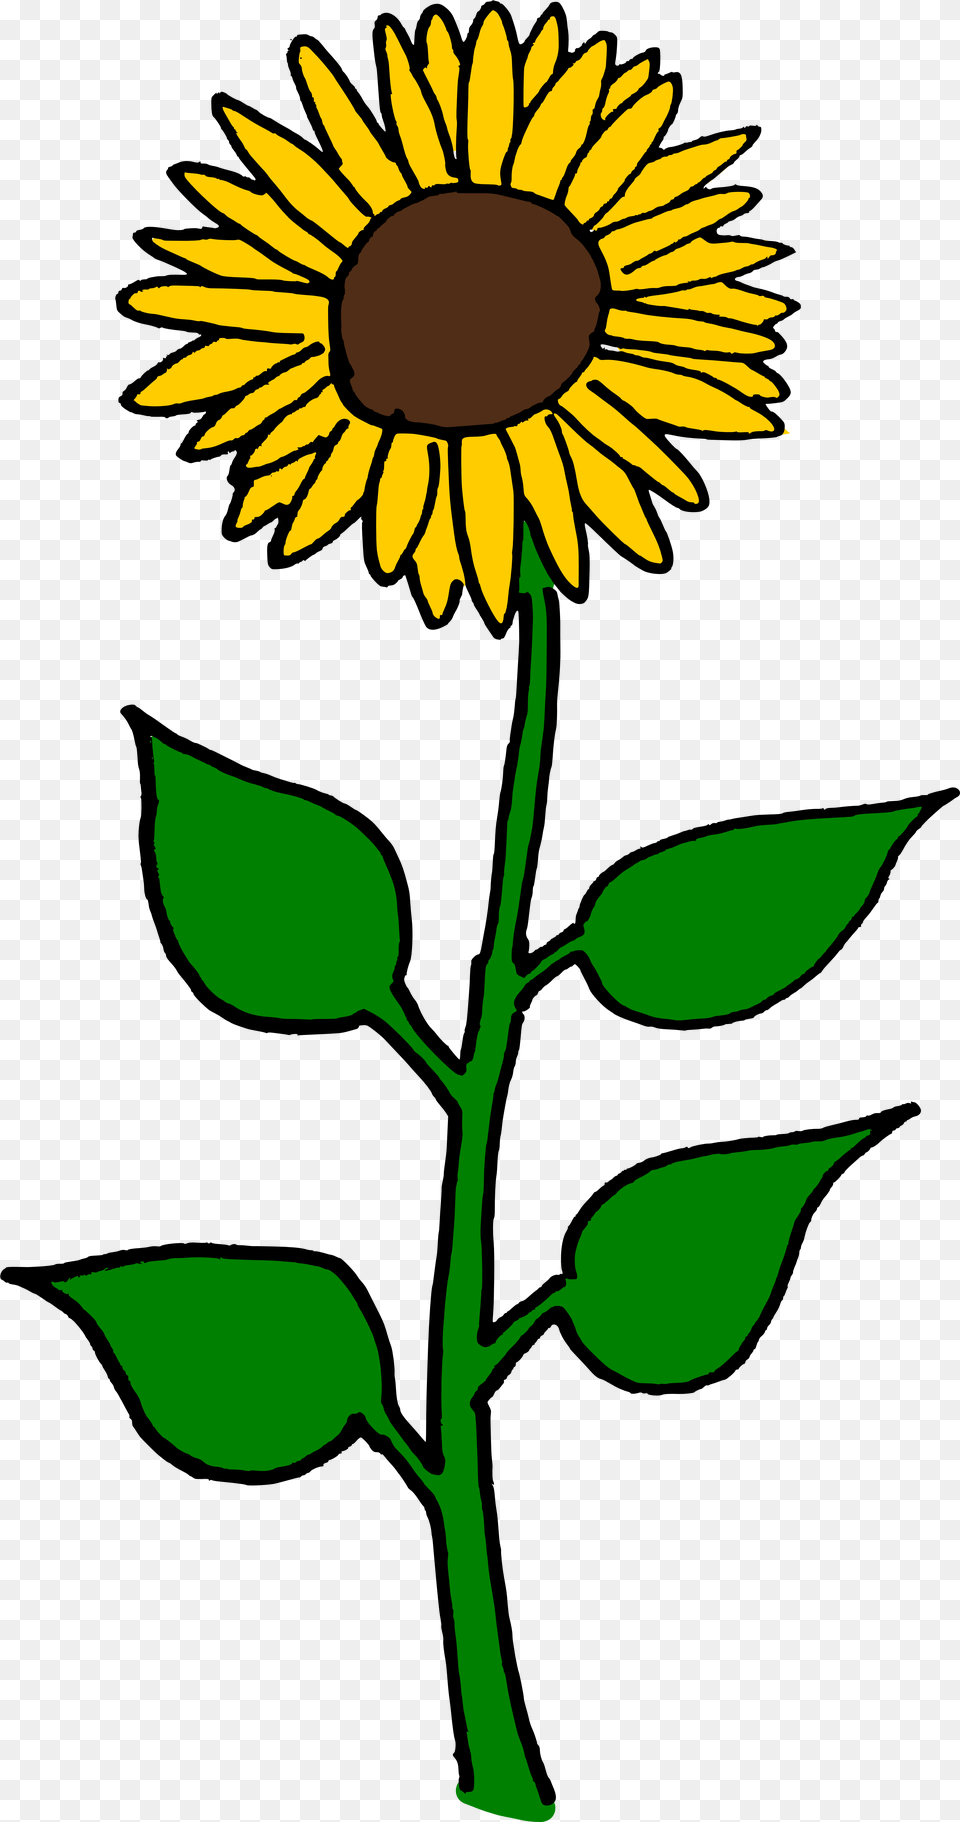 Sunflower Flowerfreepngtransparentimagesfreedownload Sun Flower Clip Art, Plant, Daisy, Animal, Bird Png